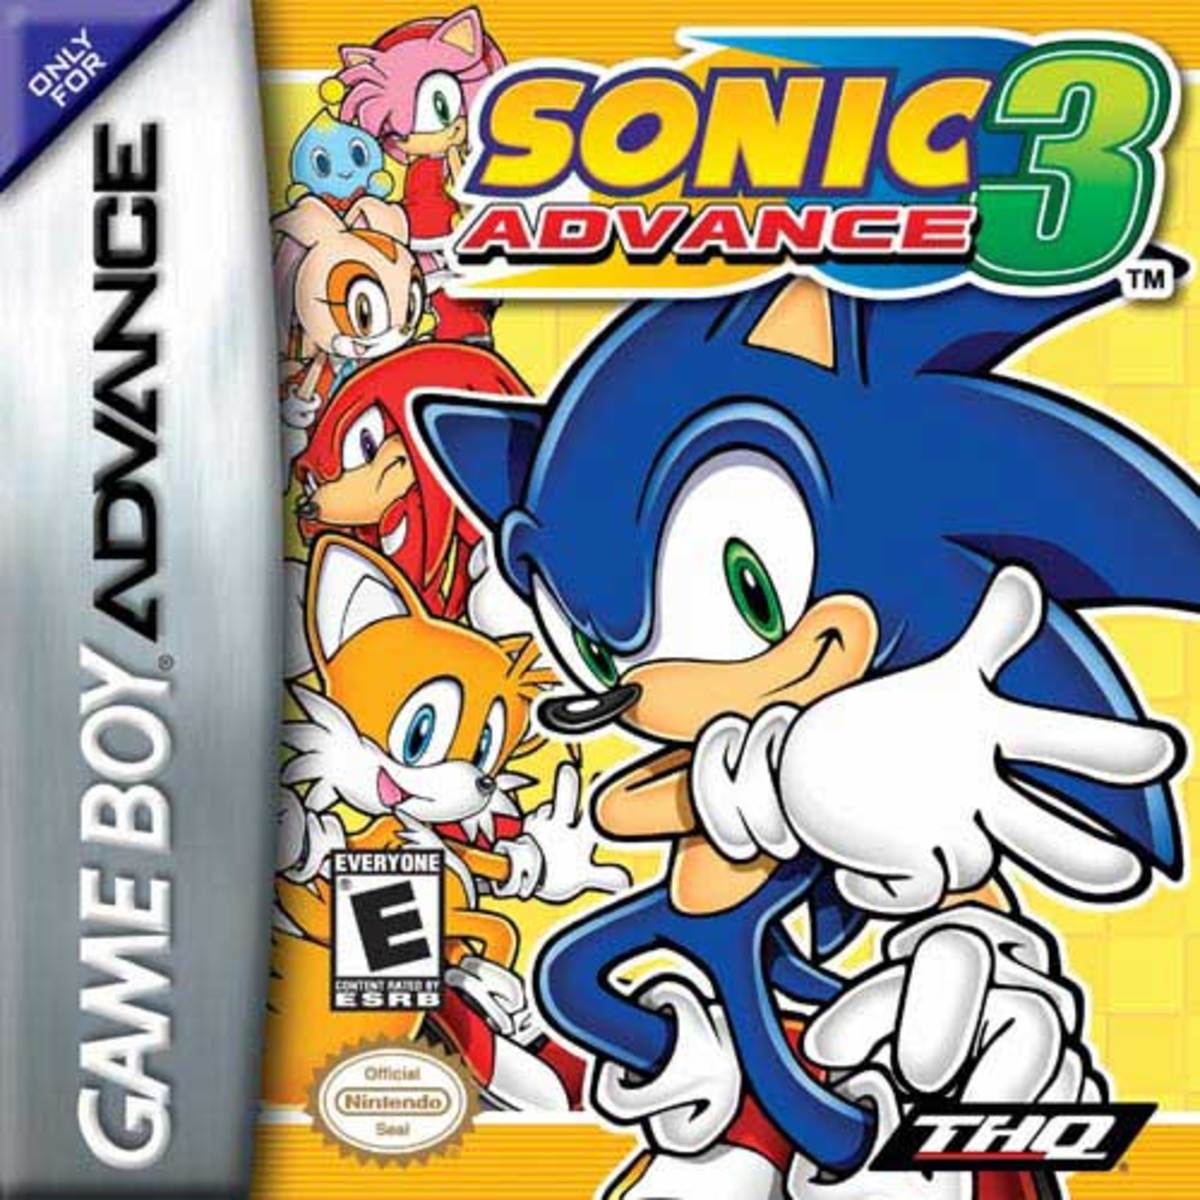 "Sonic Advance 3" Cover Art